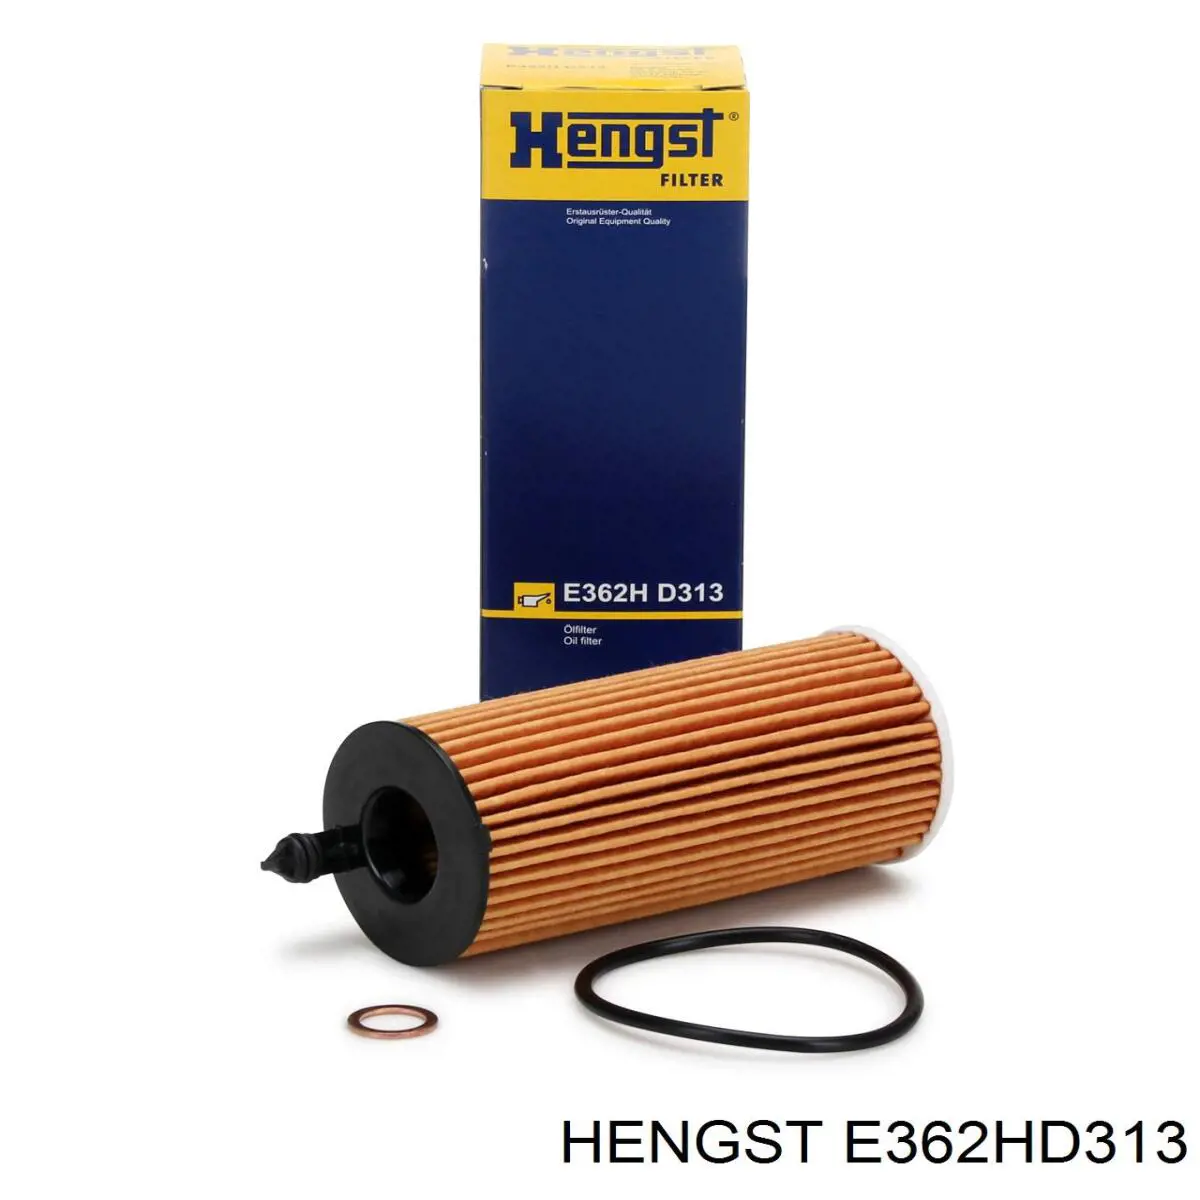 E362HD313 Hengst filtro de aceite